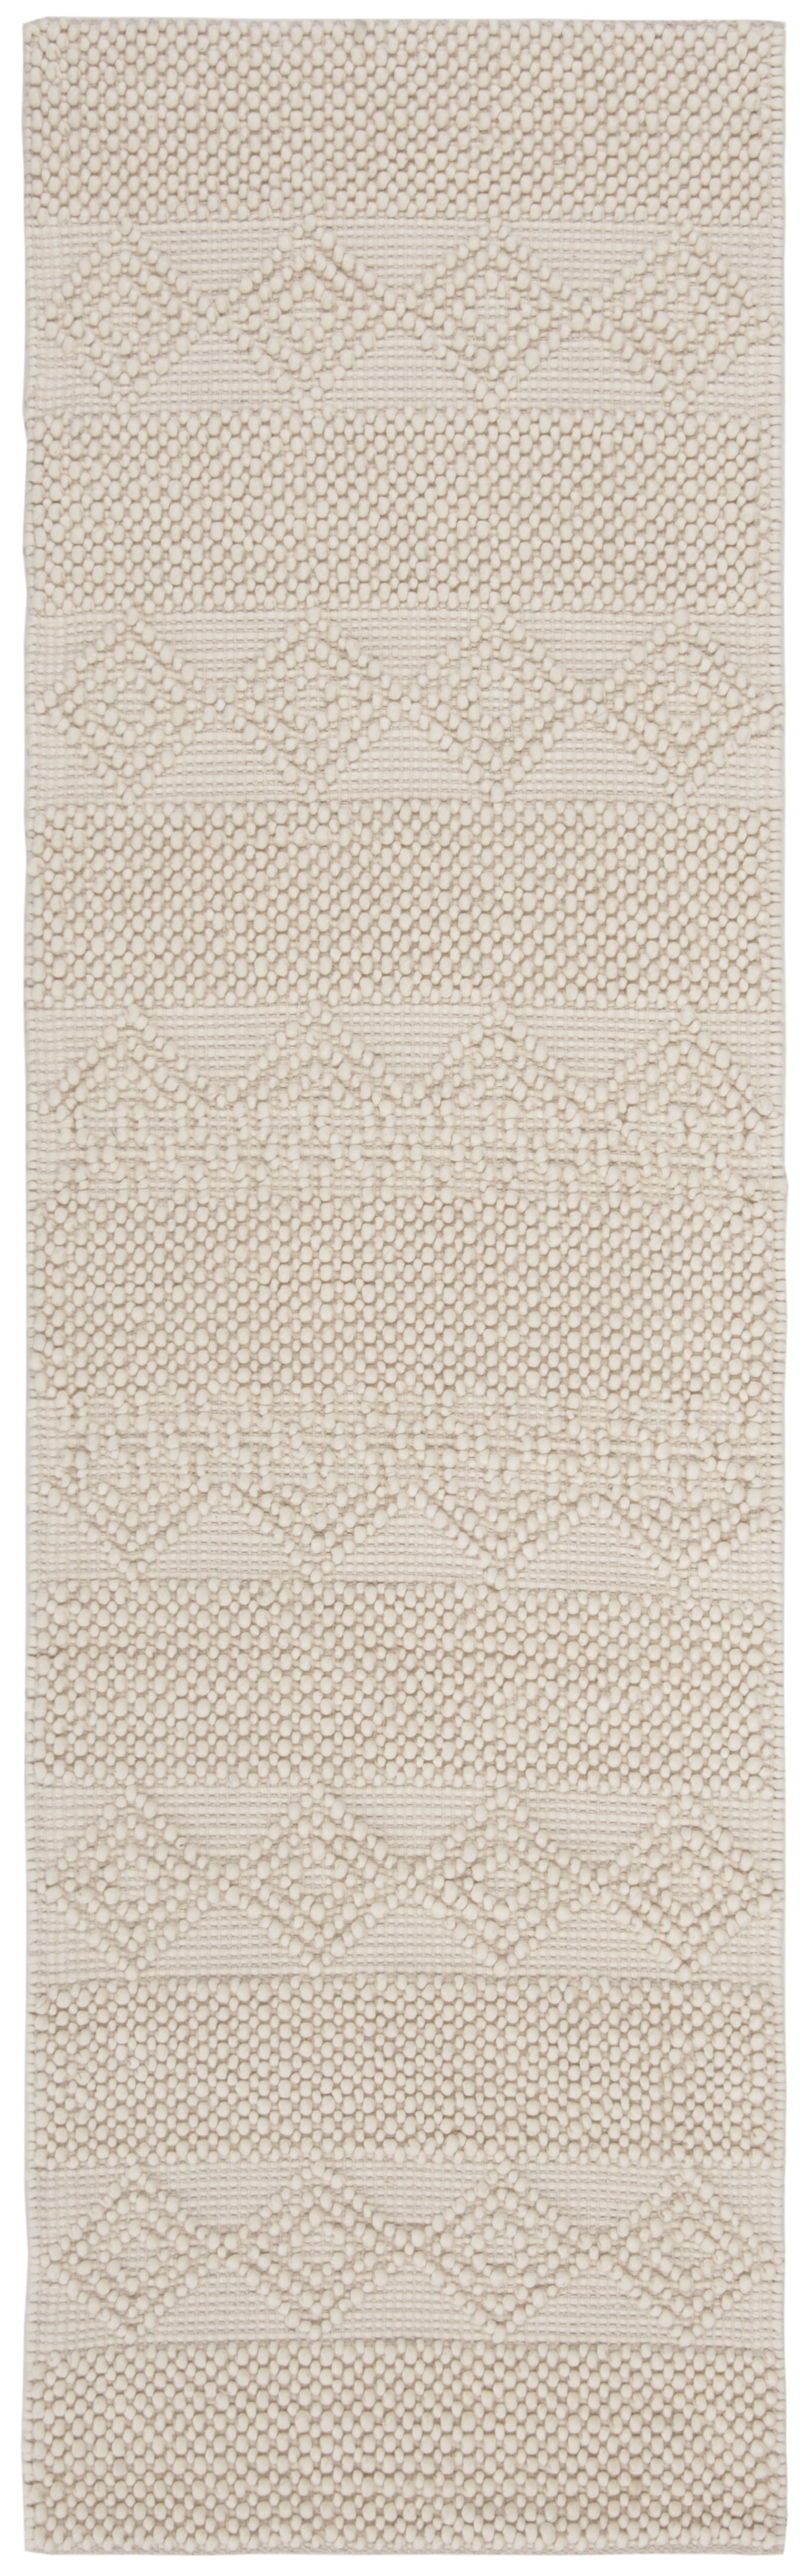 SAFAVIEH Natura Carly Geometric Braided Wool Area Rug, Beige/Ivory, 2' x 3'  - Walmart.com